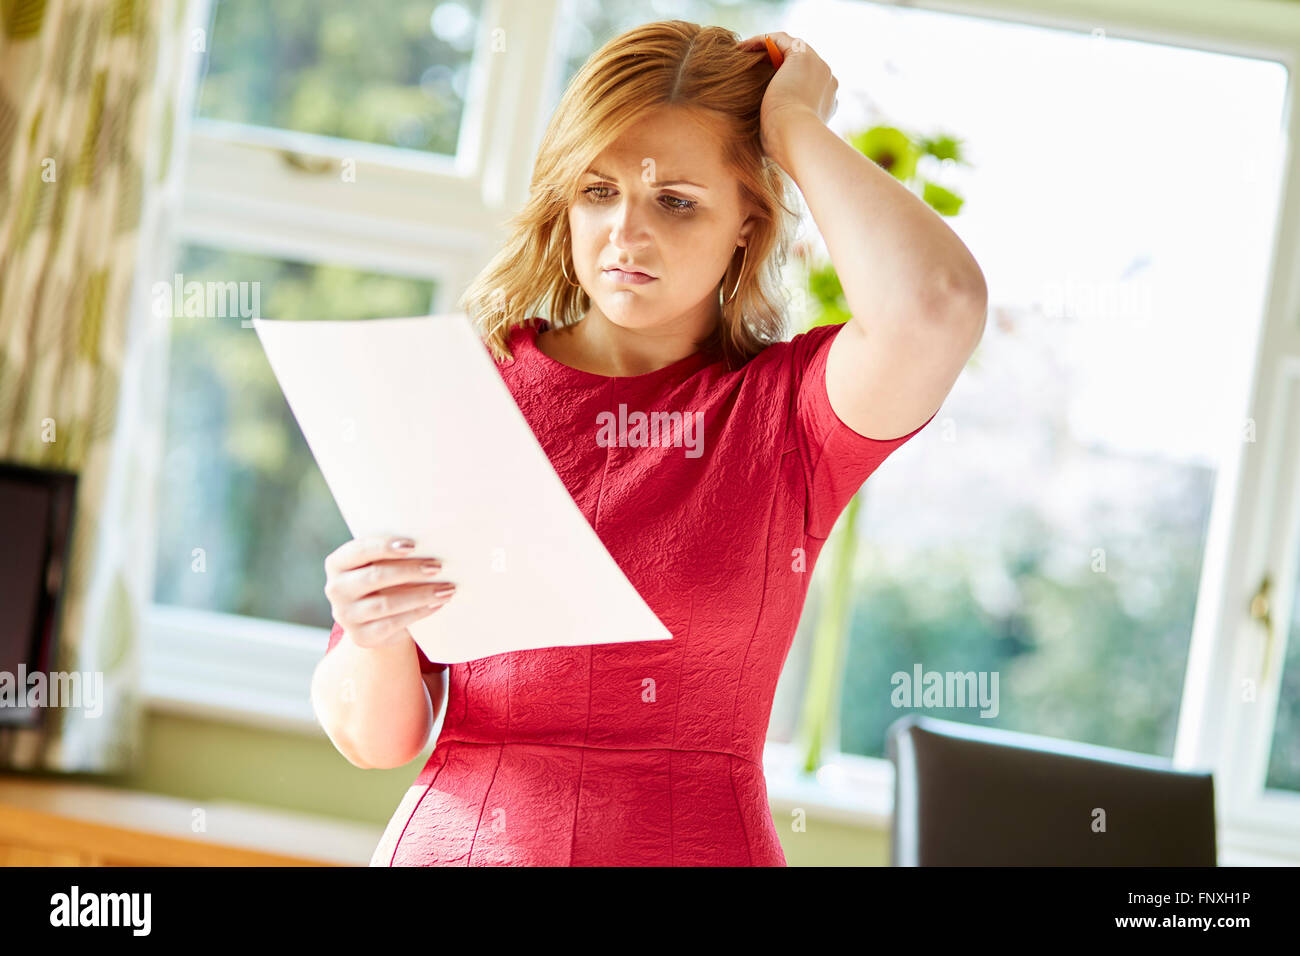 woman checking accounts Stock Photo